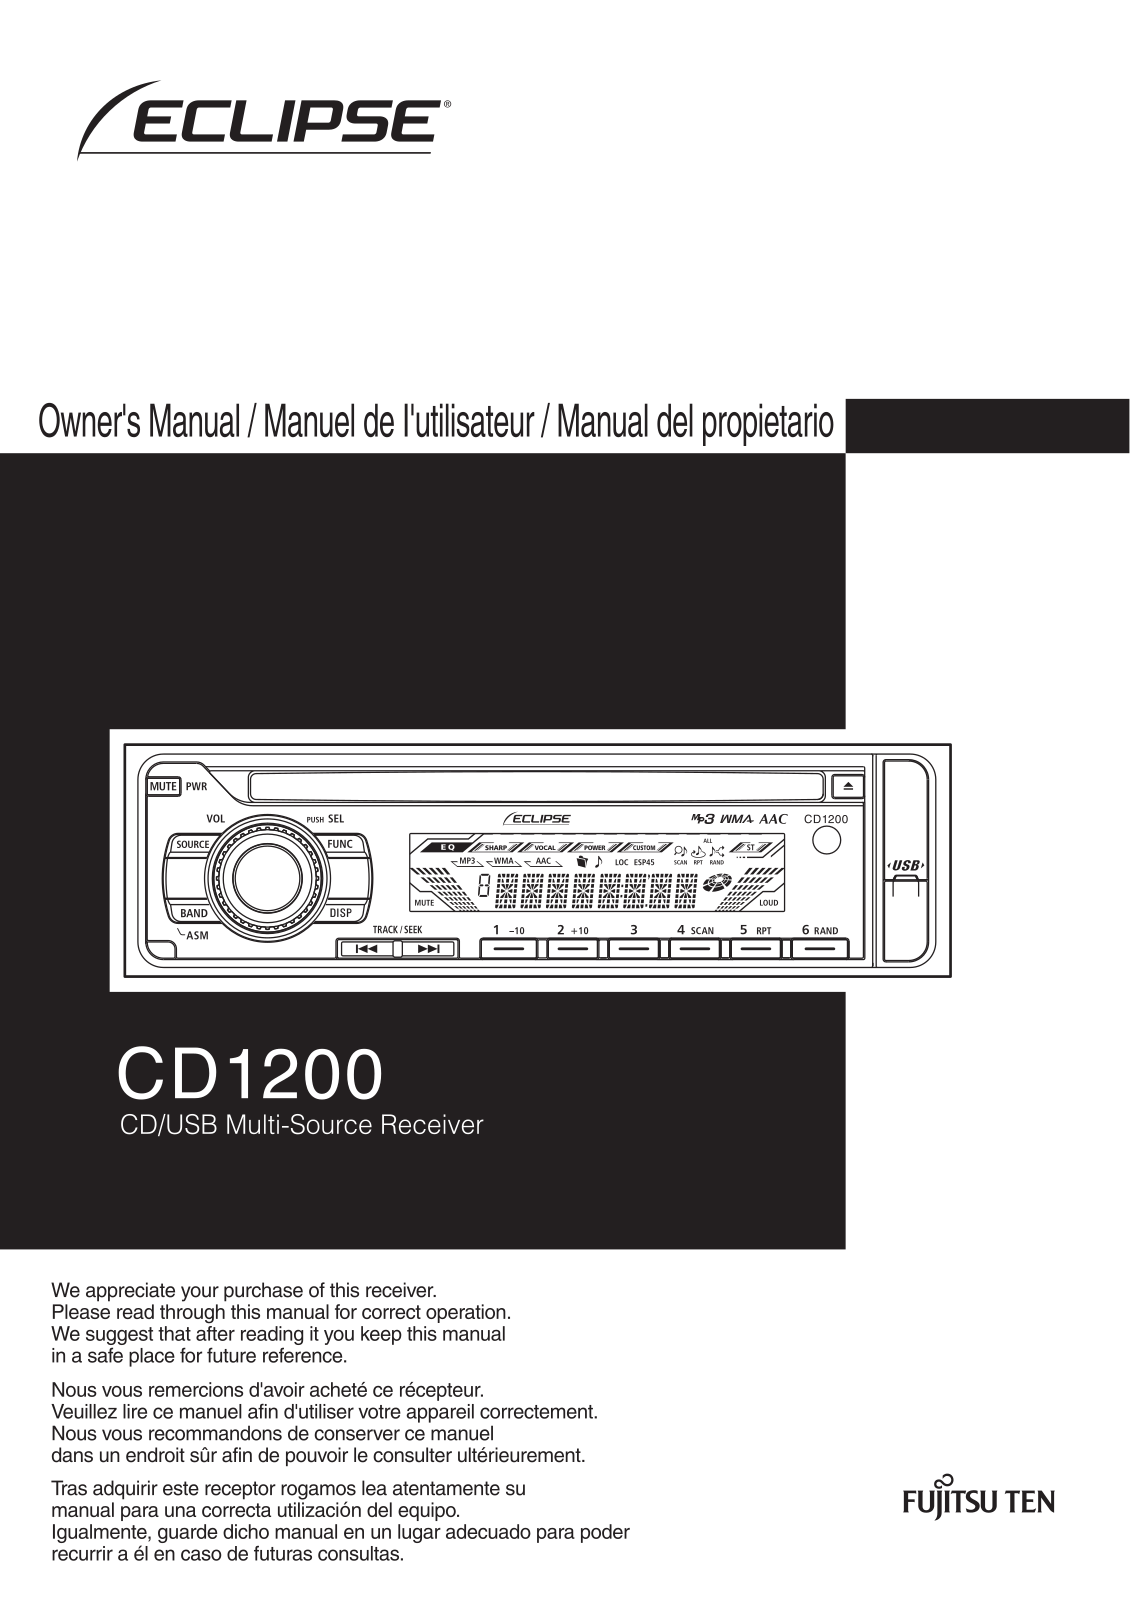 Fujitsu ECLIPSE CD1200 Owner's Manual